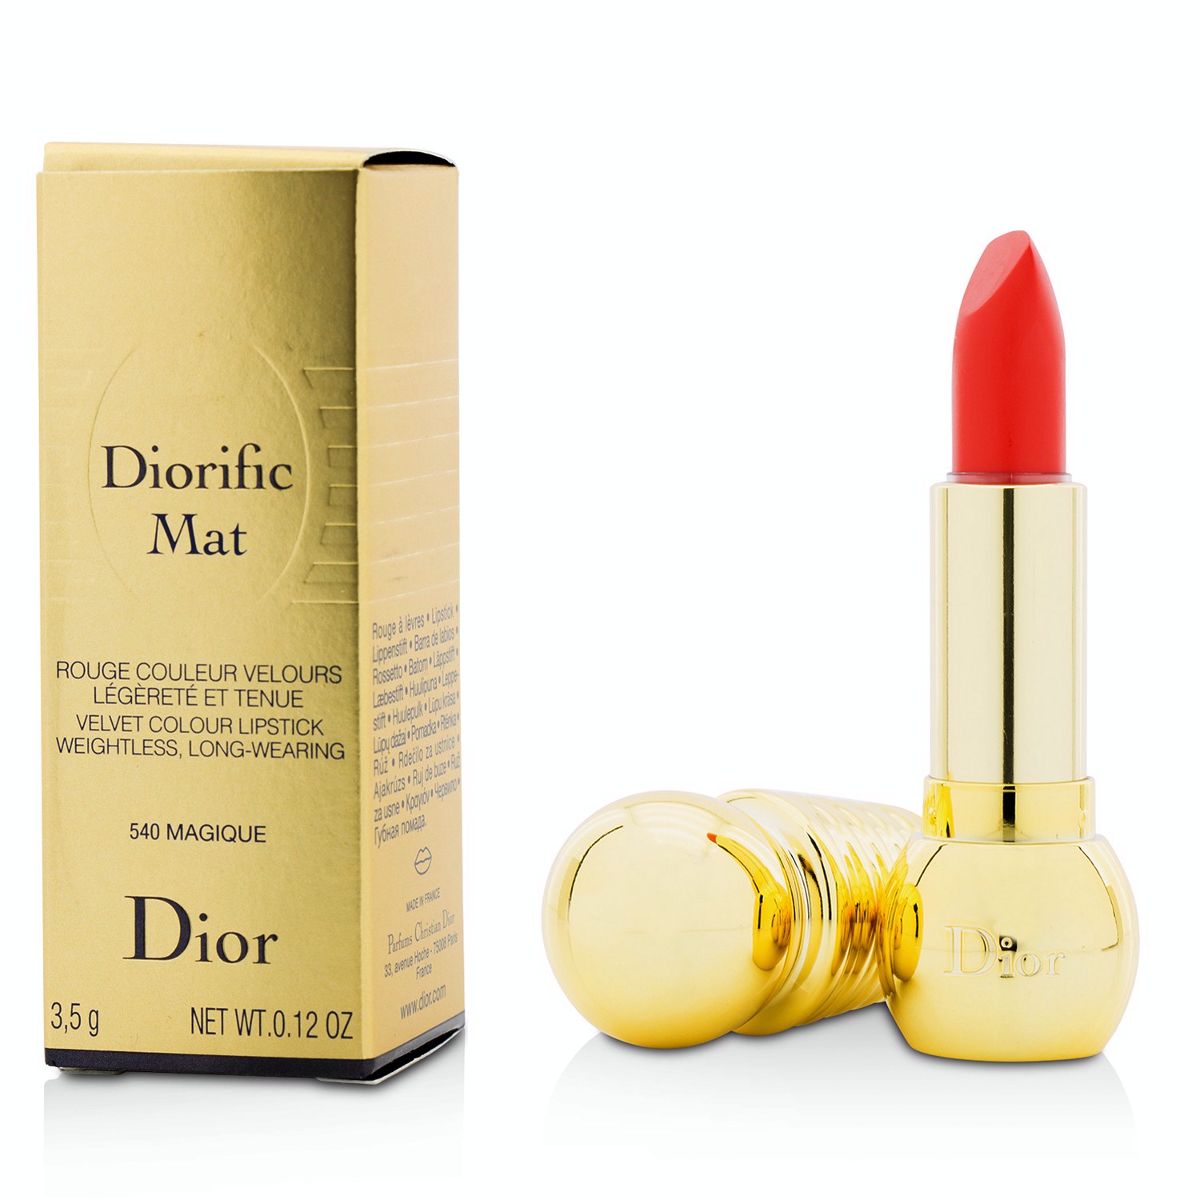 Diorific Mat Velvet Colour Lipstick - # 540 Magique Christian Dior Image